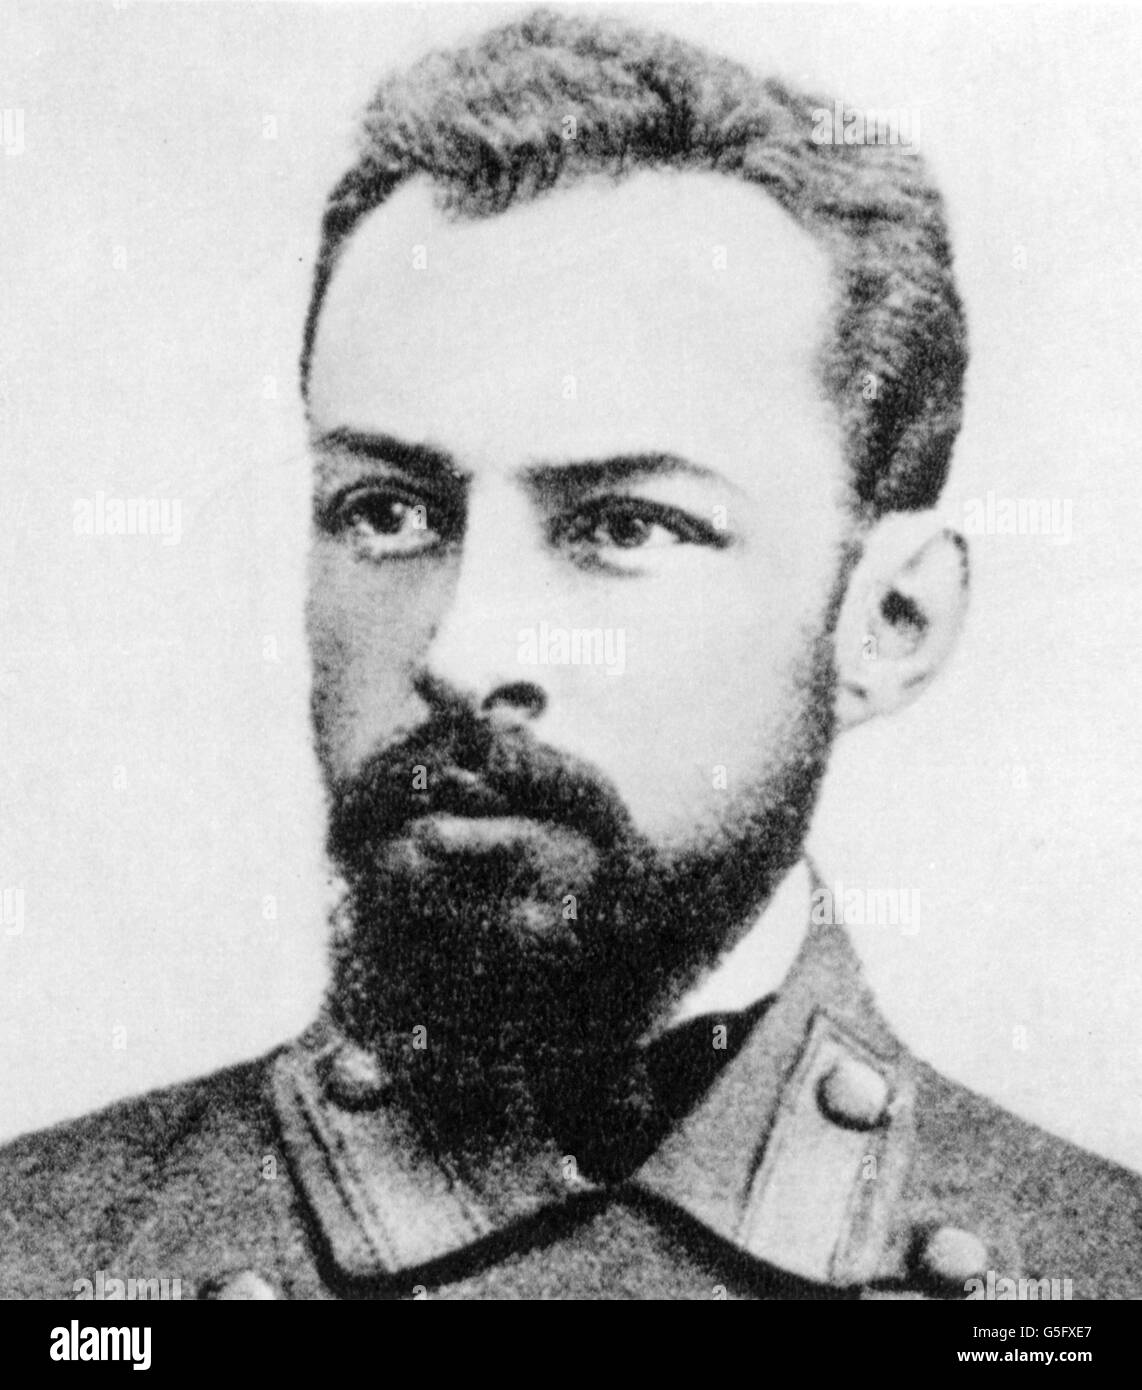 Lenin (Vladimir Ilyich Ulyanov), 22.4.1870 - 21.1.1924, politico russo, suo fratello Alexander Ilyich Ulyanov, ritratto, circa 1885, Foto Stock